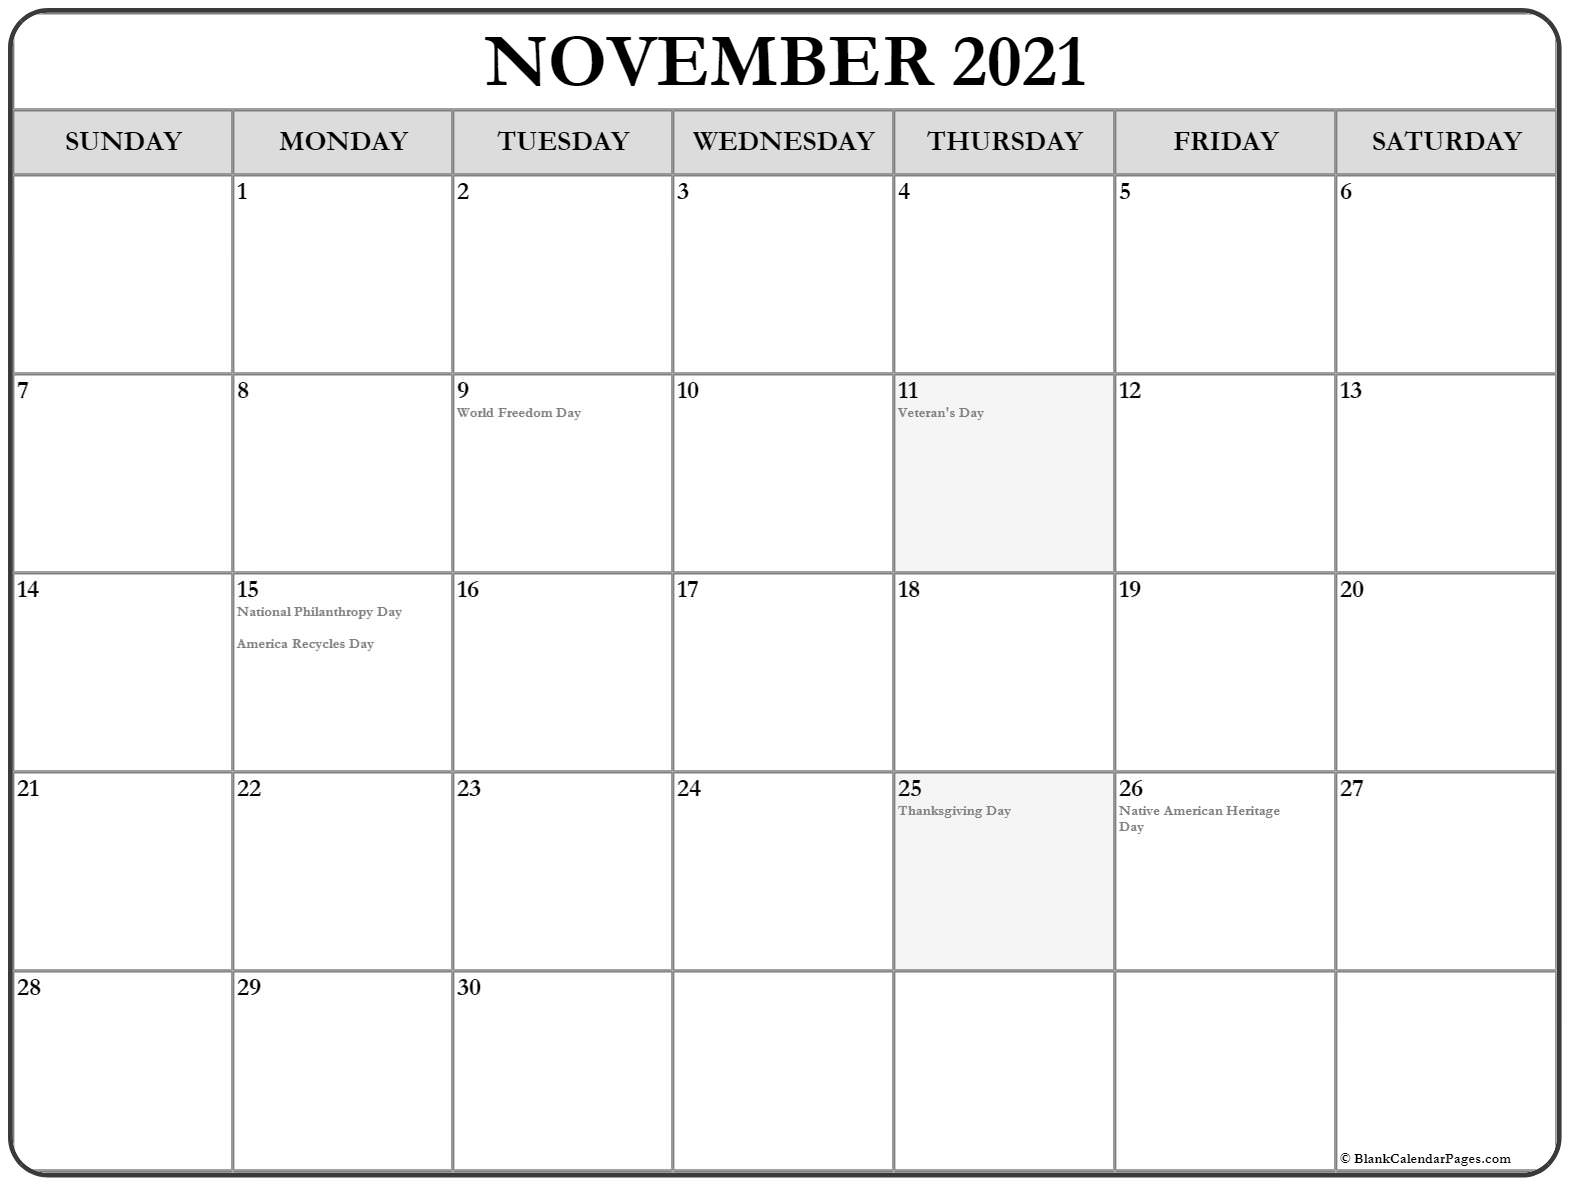 November 2021 Calendar | Free Printable Monthly Calendars November December 2020 January February 2021 Calendar